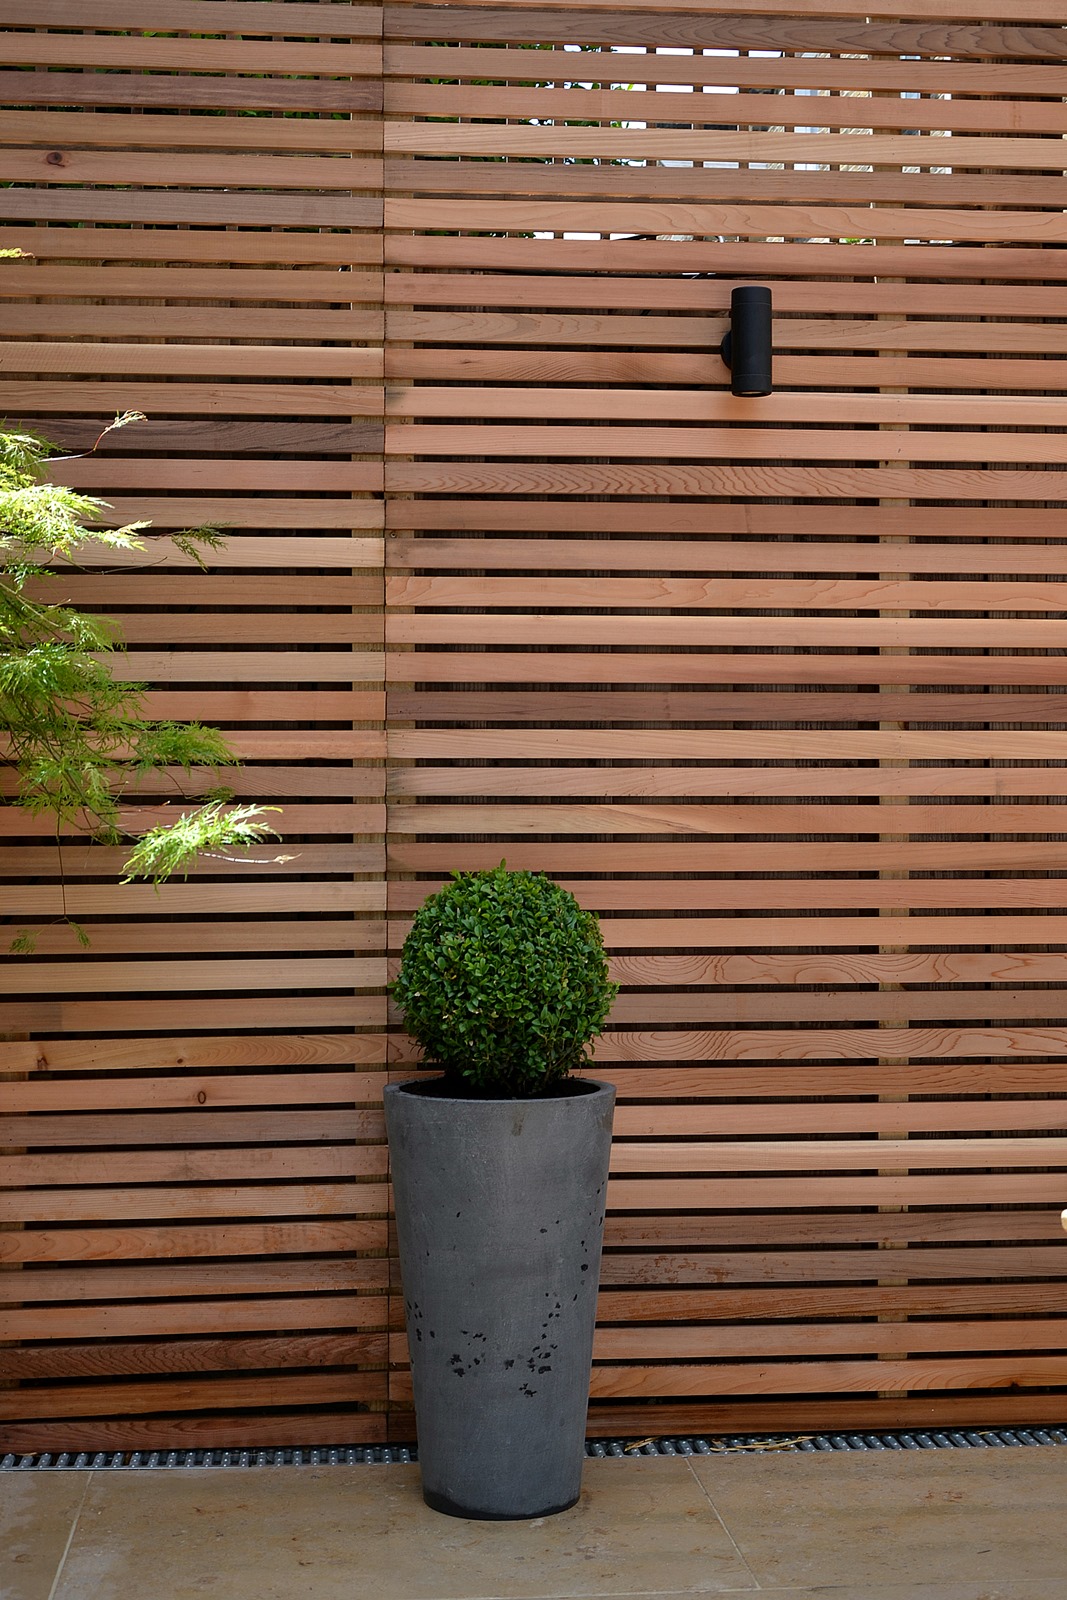 cedar screen raised planter bed limestone paving hardwood bench clapham london (3)